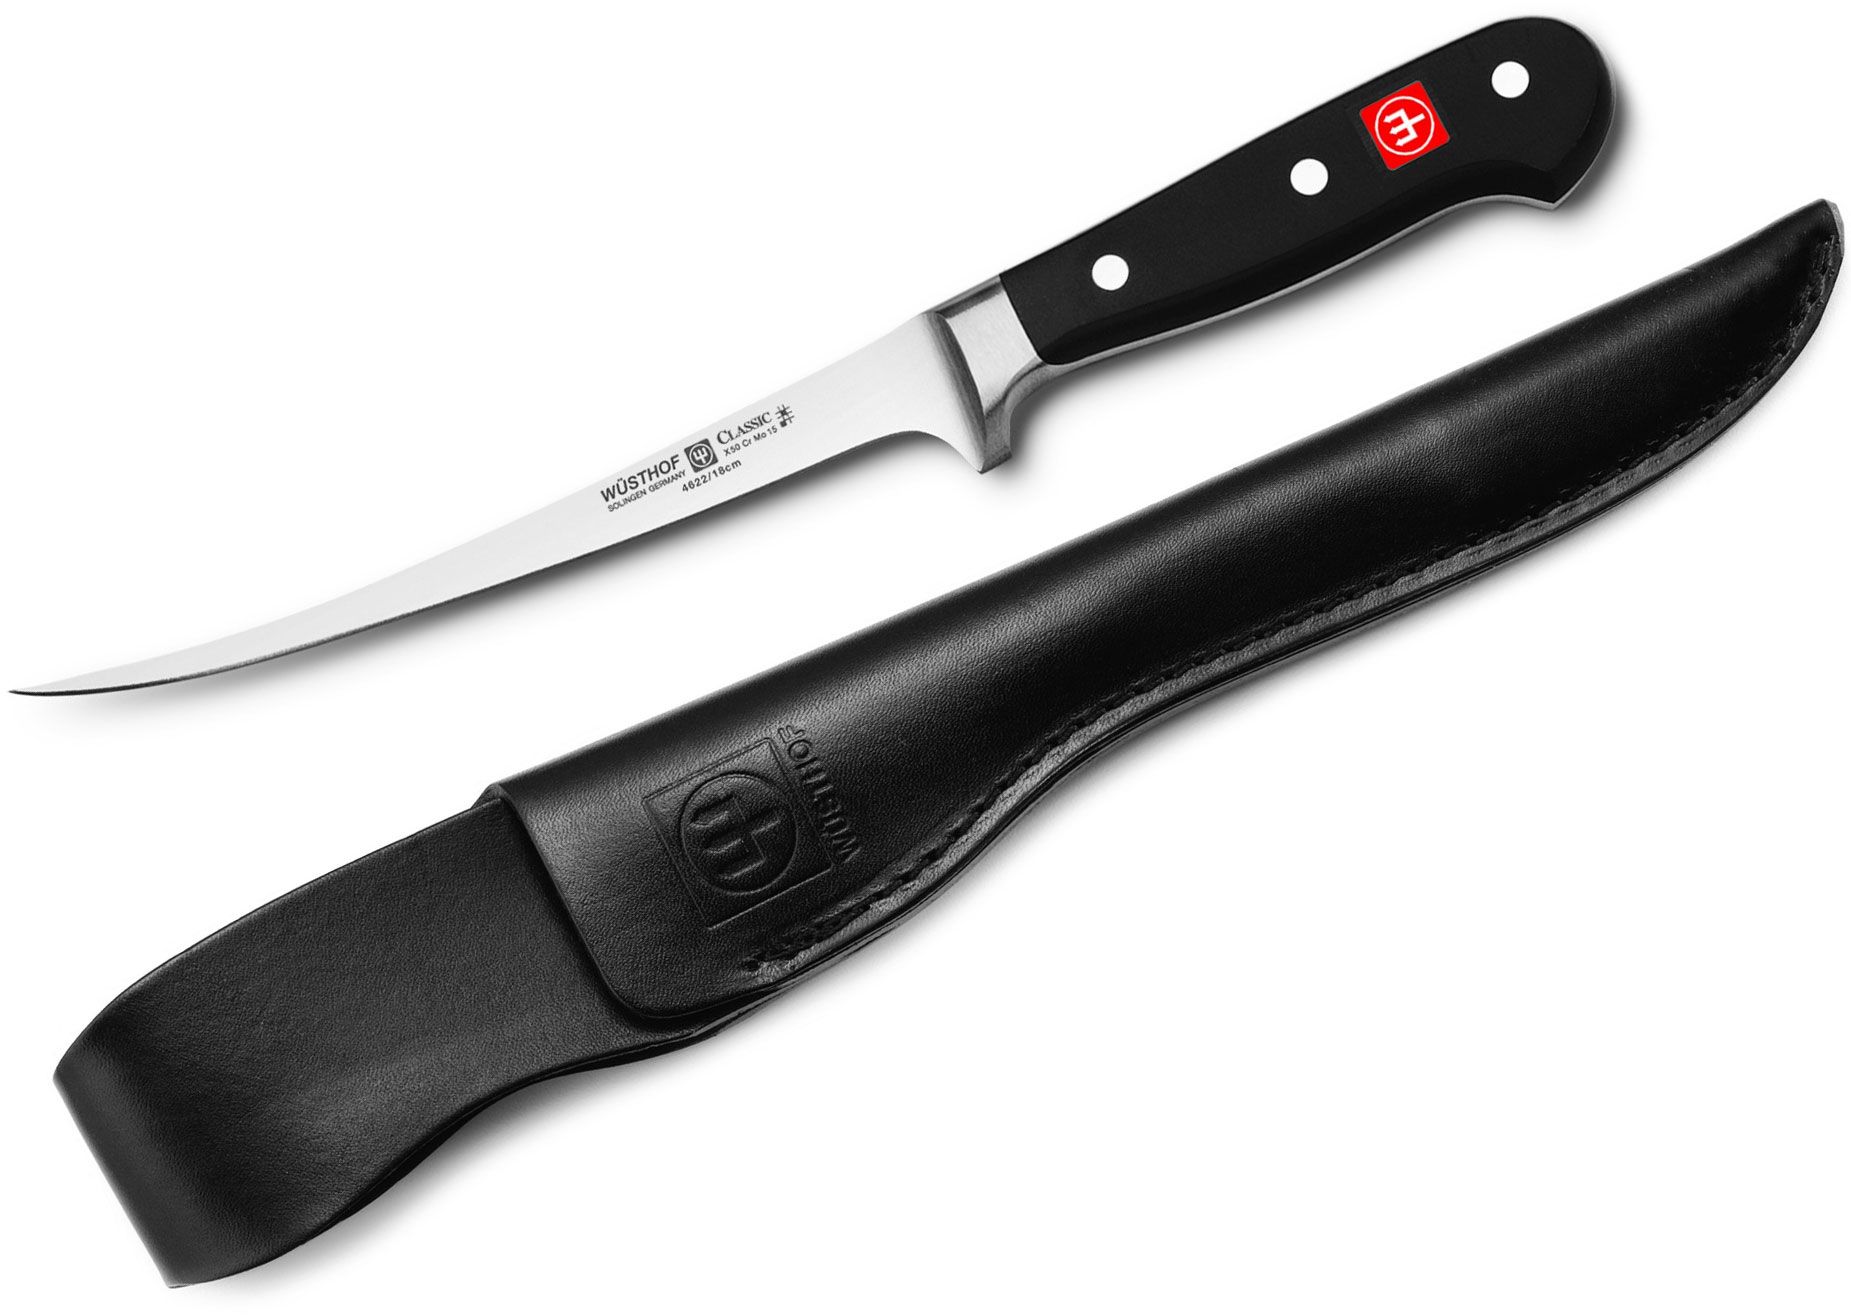 Wusthof Classic 7" Fillet Knife, Leather Sheath - KnifeCenter